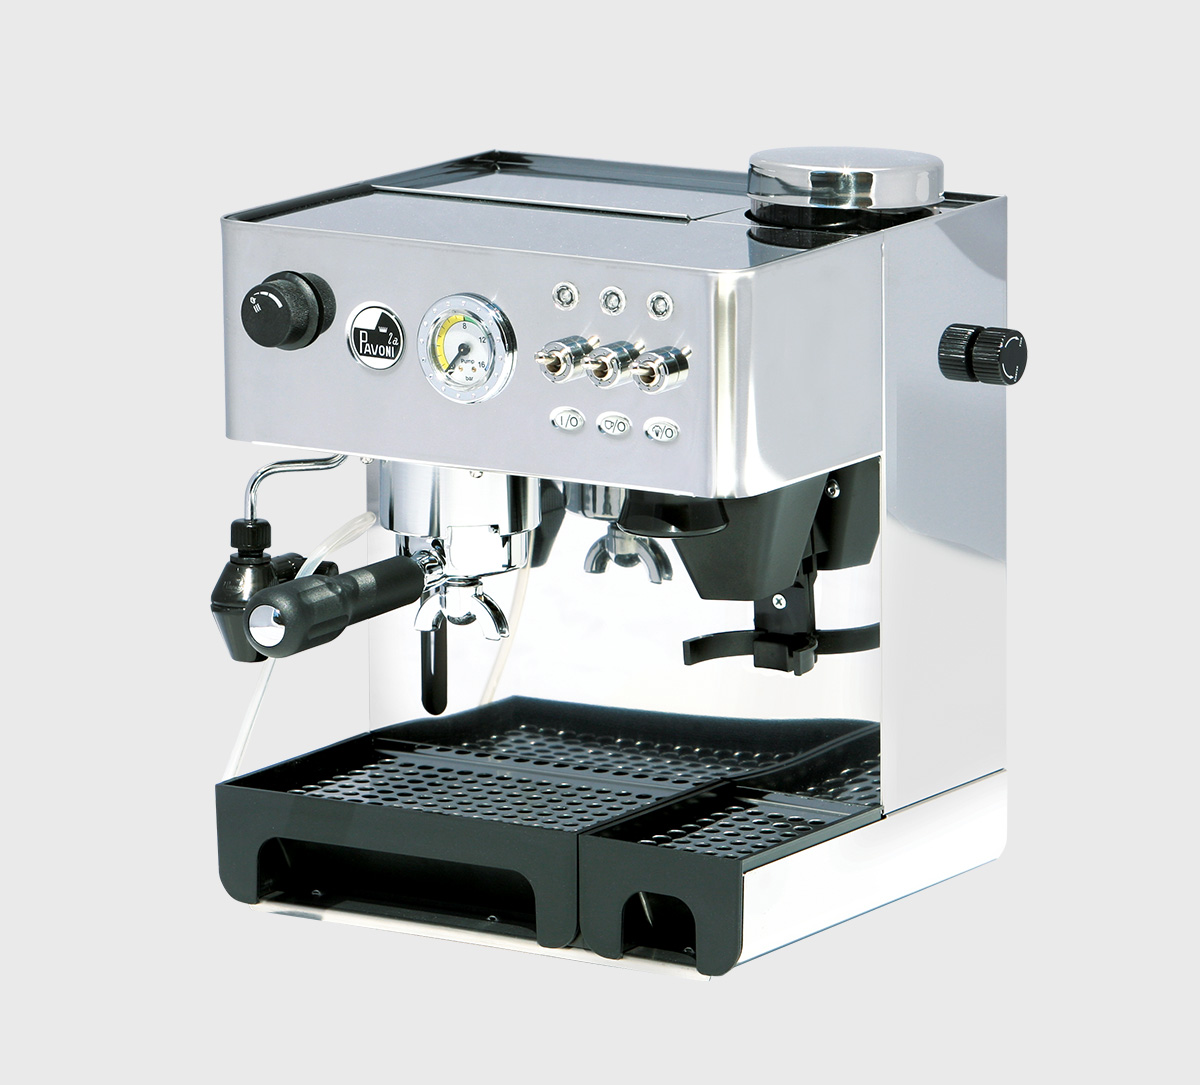 La Pavoni Domus Bar Espresso automāts